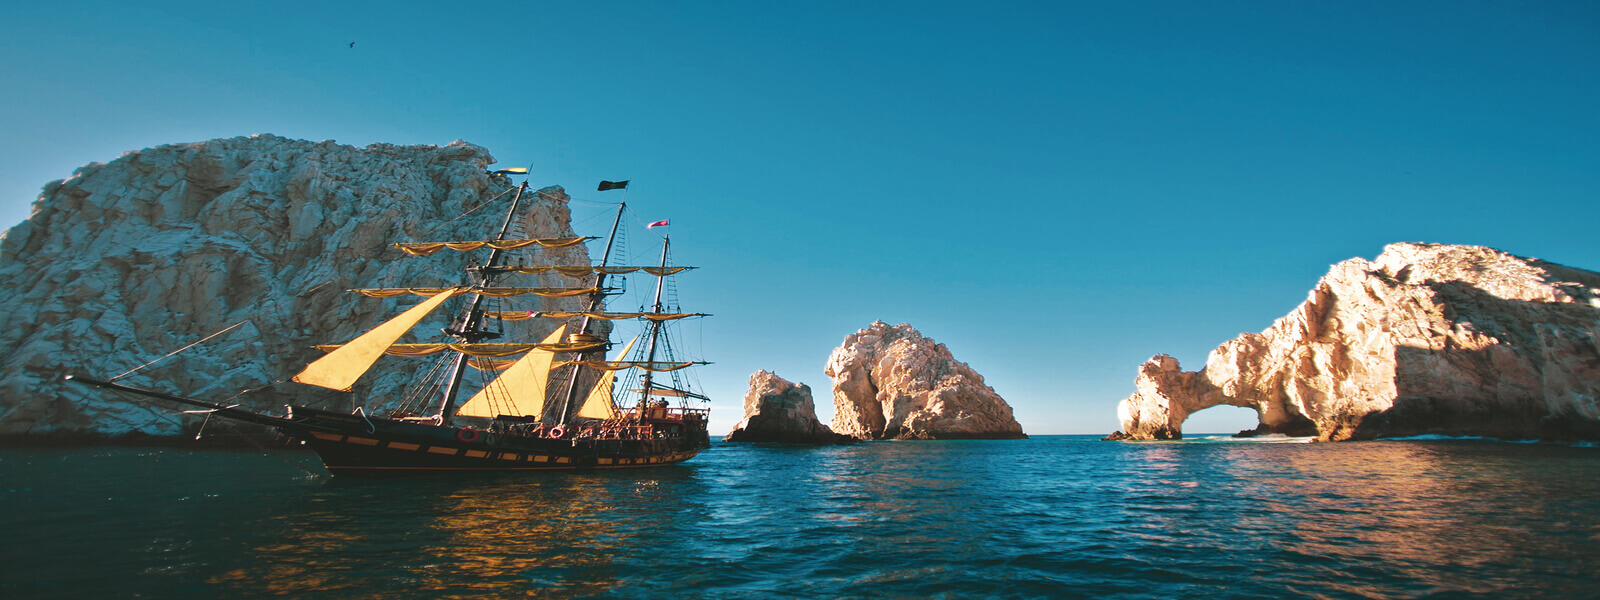 pirate ship tour cabo san lucas